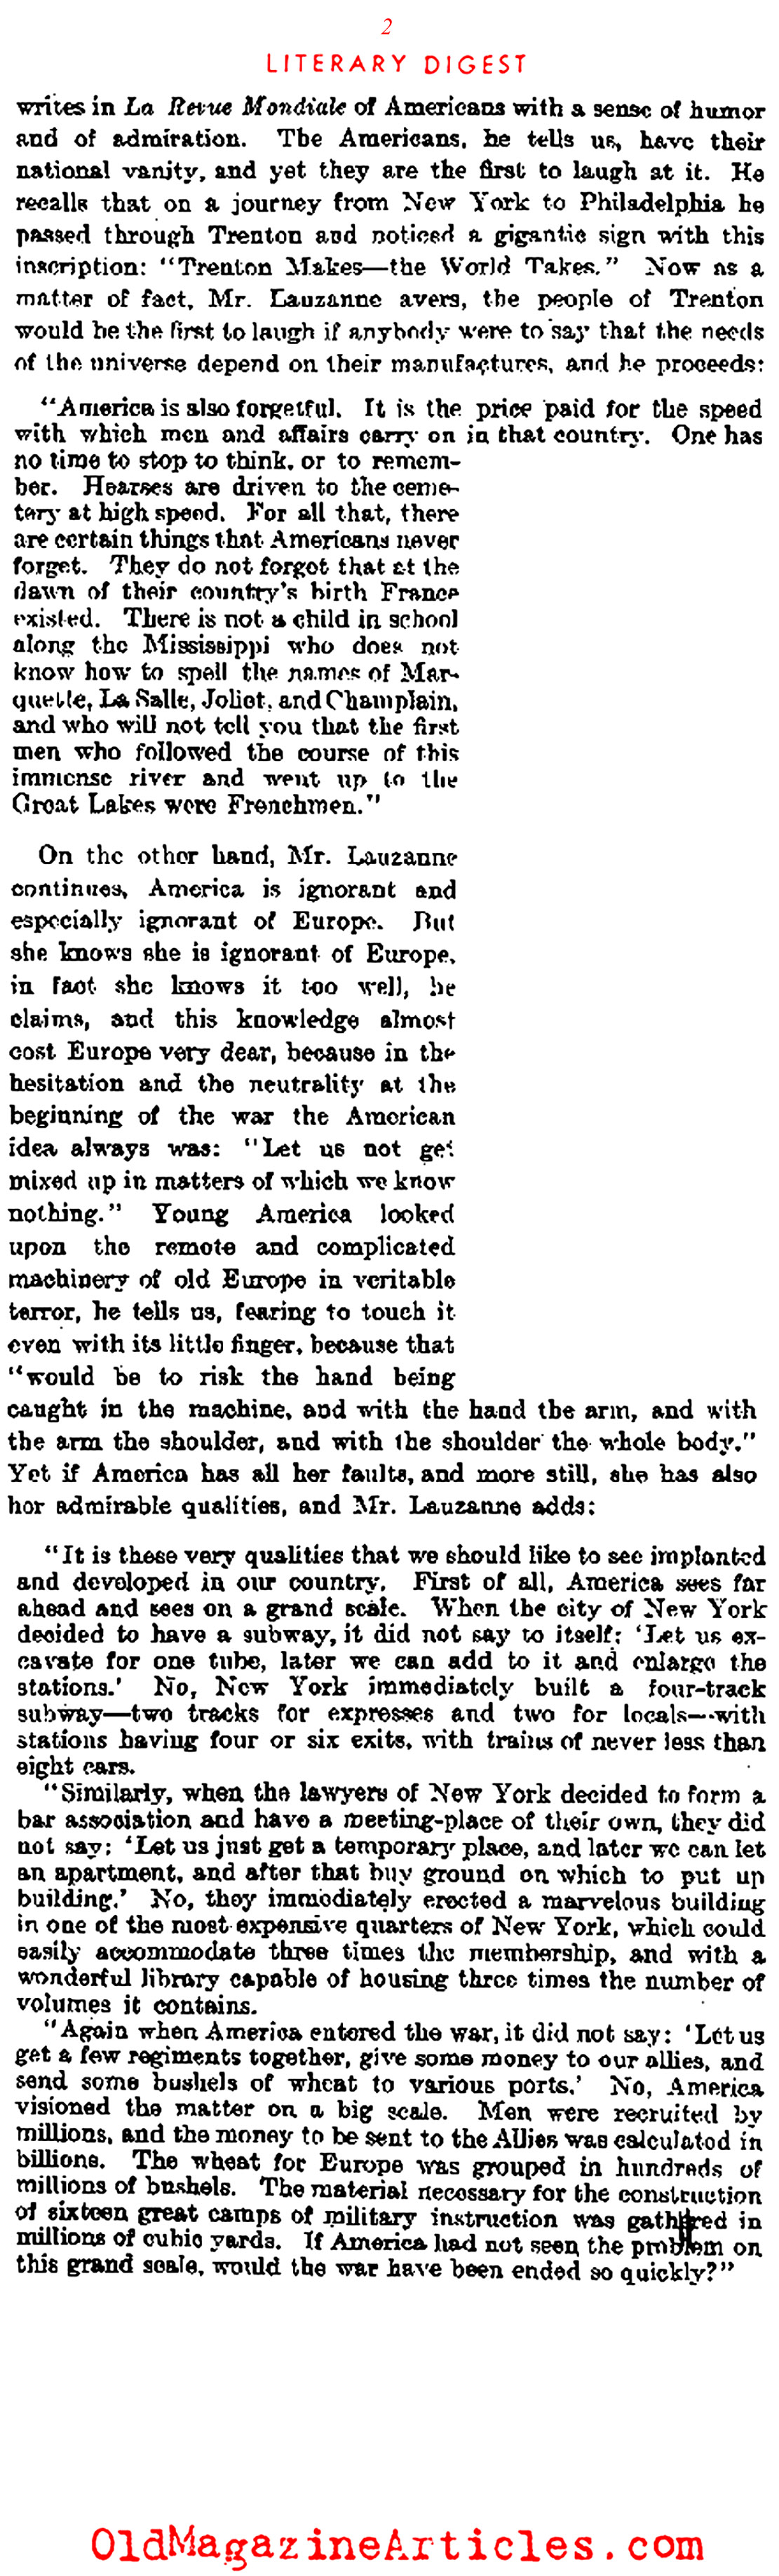 America Vilified in the European Press (Literary Digest, 1928)